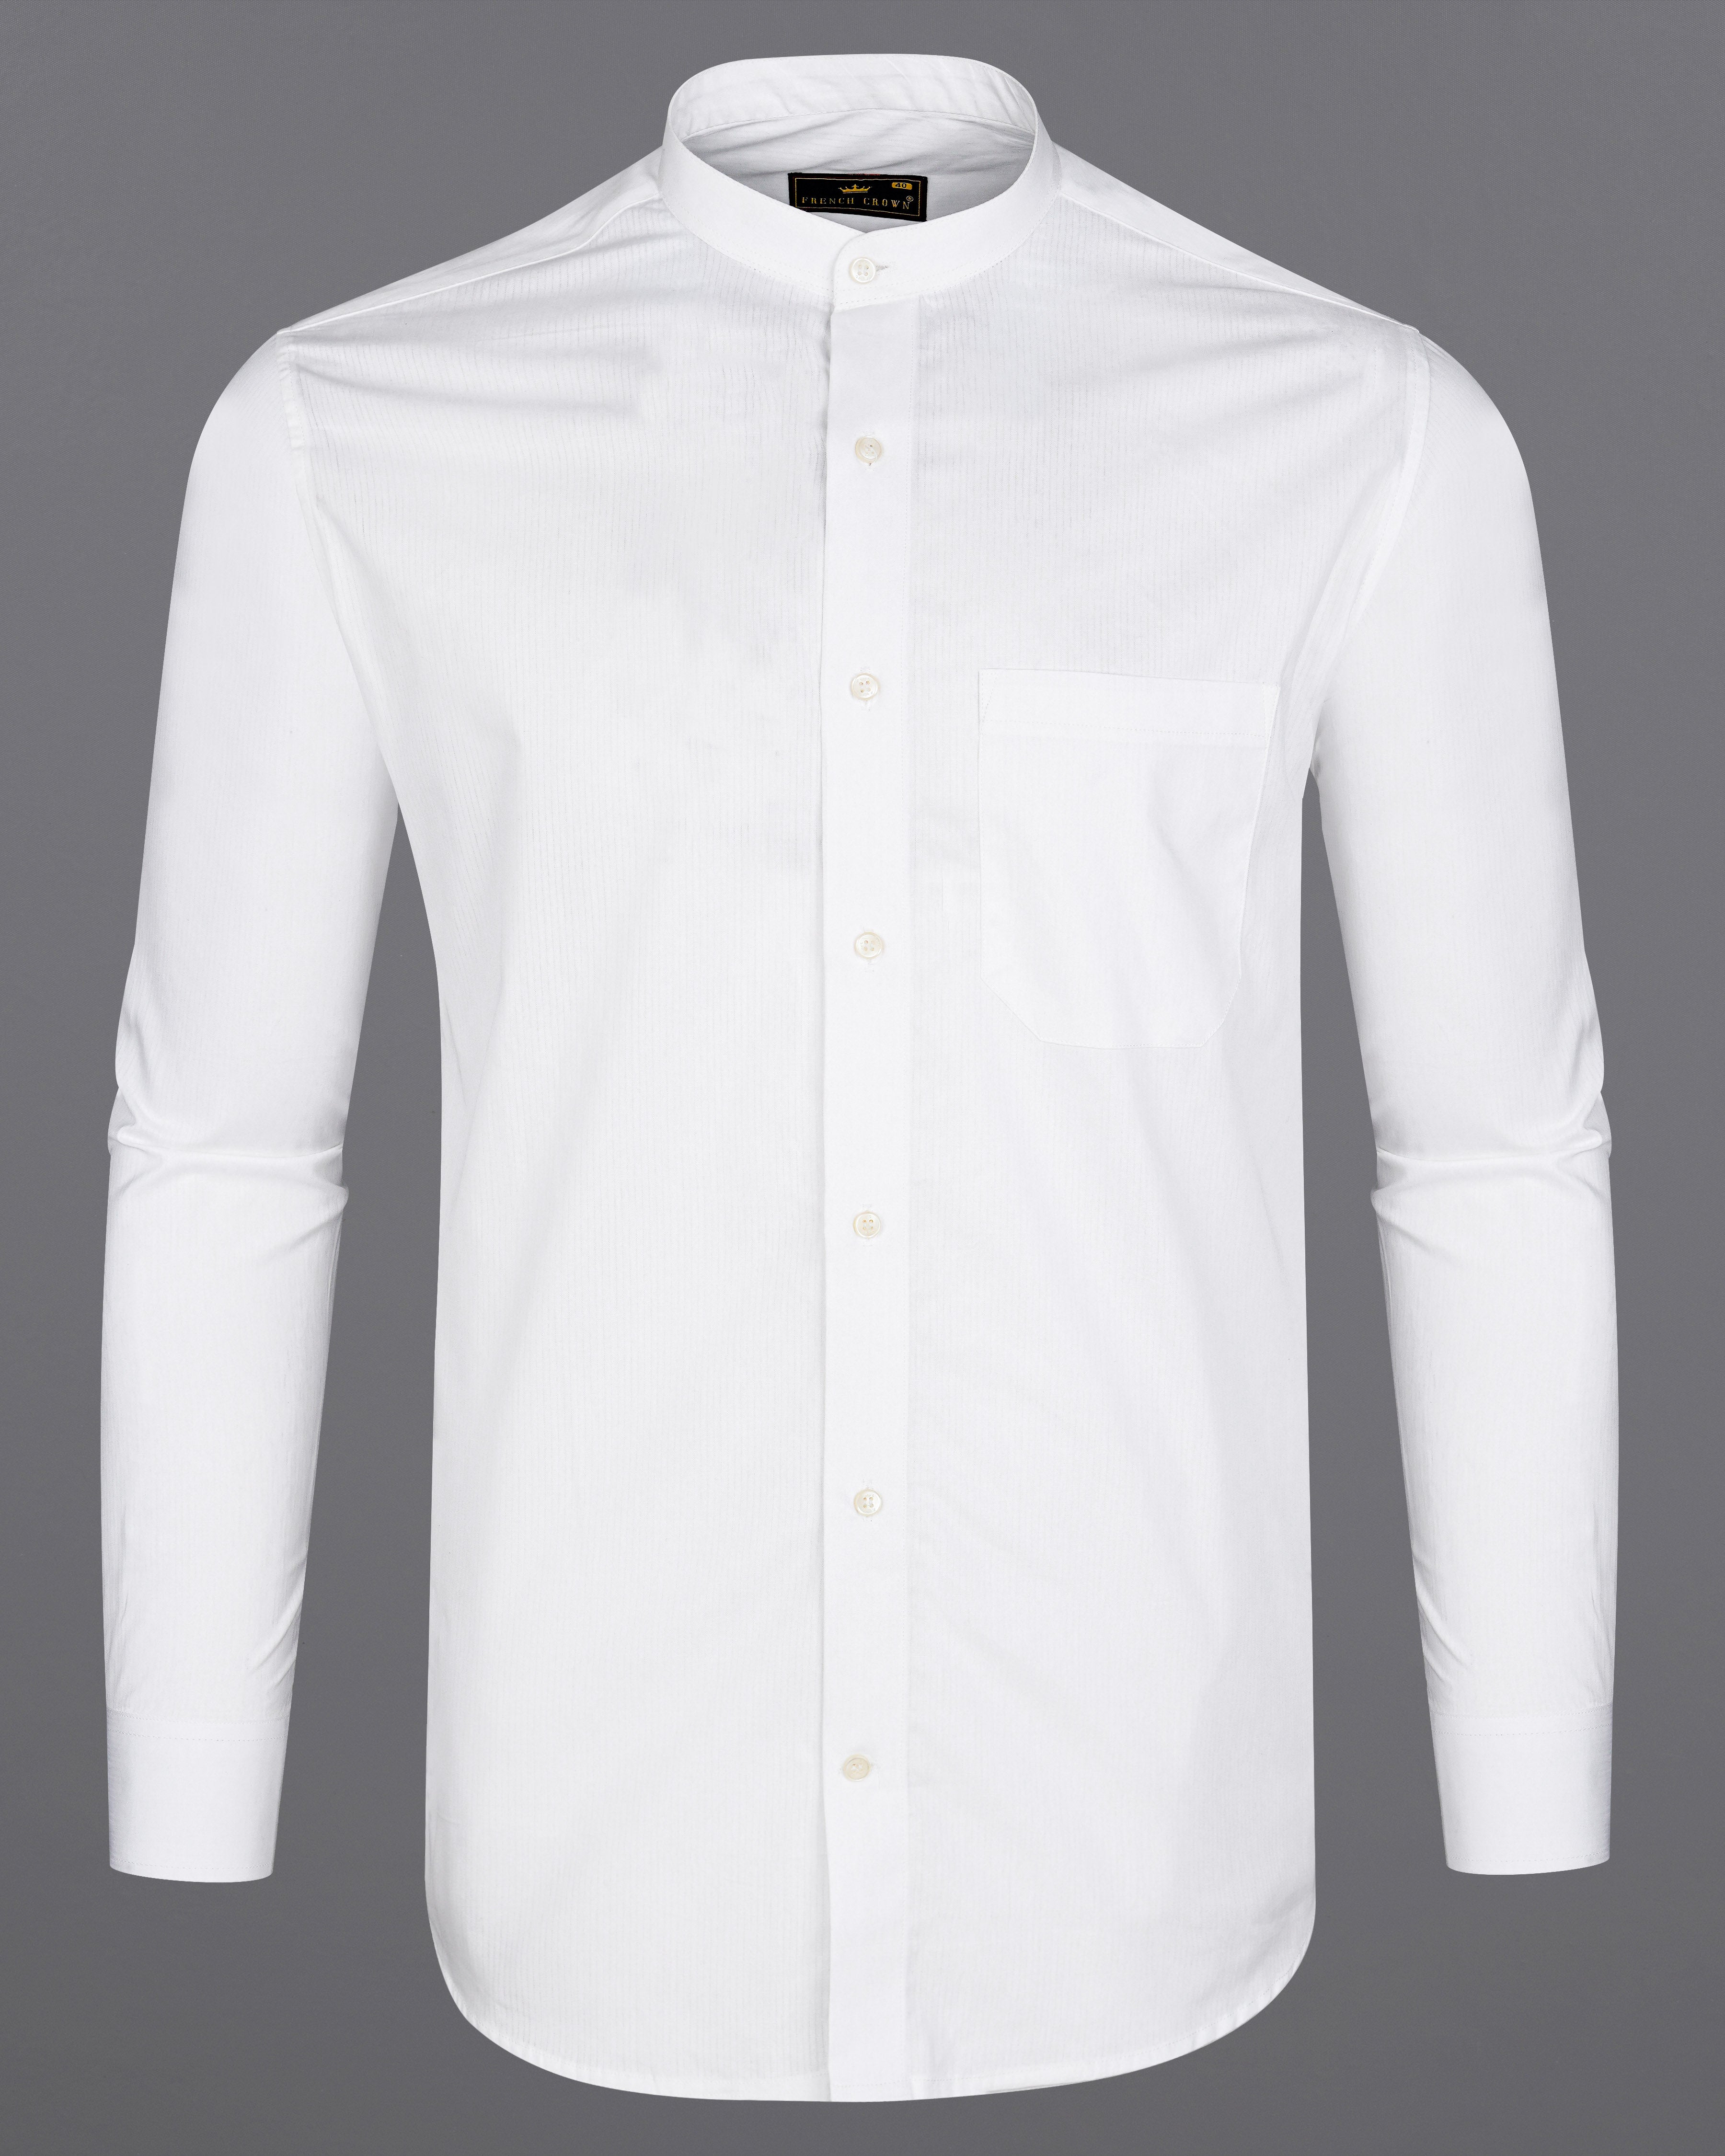 Bright White Dobby Textured Premium Giza Cotton Shirt 8454-M-38,8454-M-H-38,8454-M-39,8454-M-H-39,8454-M-40,8454-M-H-40,8454-M-42,8454-M-H-42,8454-M-44,8454-M-H-44,8454-M-46,8454-M-H-46,8454-M-48,8454-M-H-48,8454-M-50,8454-M-H-50,8454-M-52,8454-M-H-52